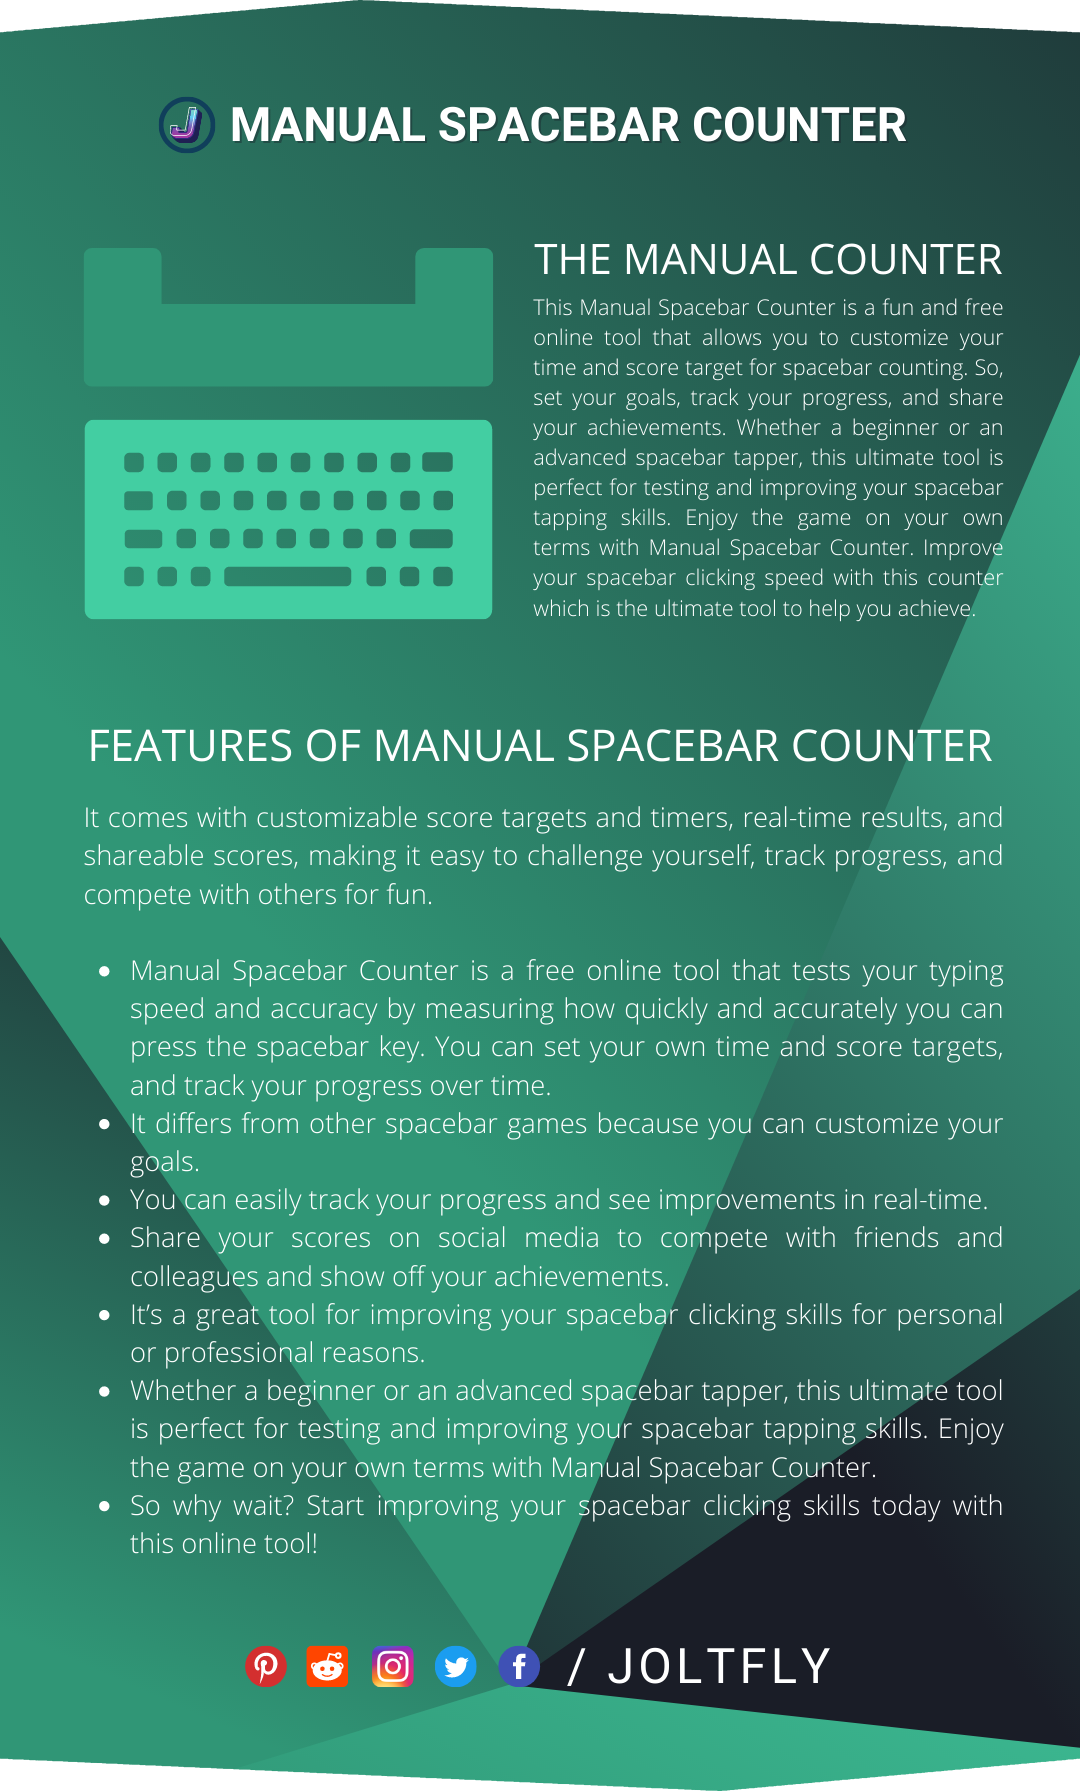 Manual Spacebar Counter-Features